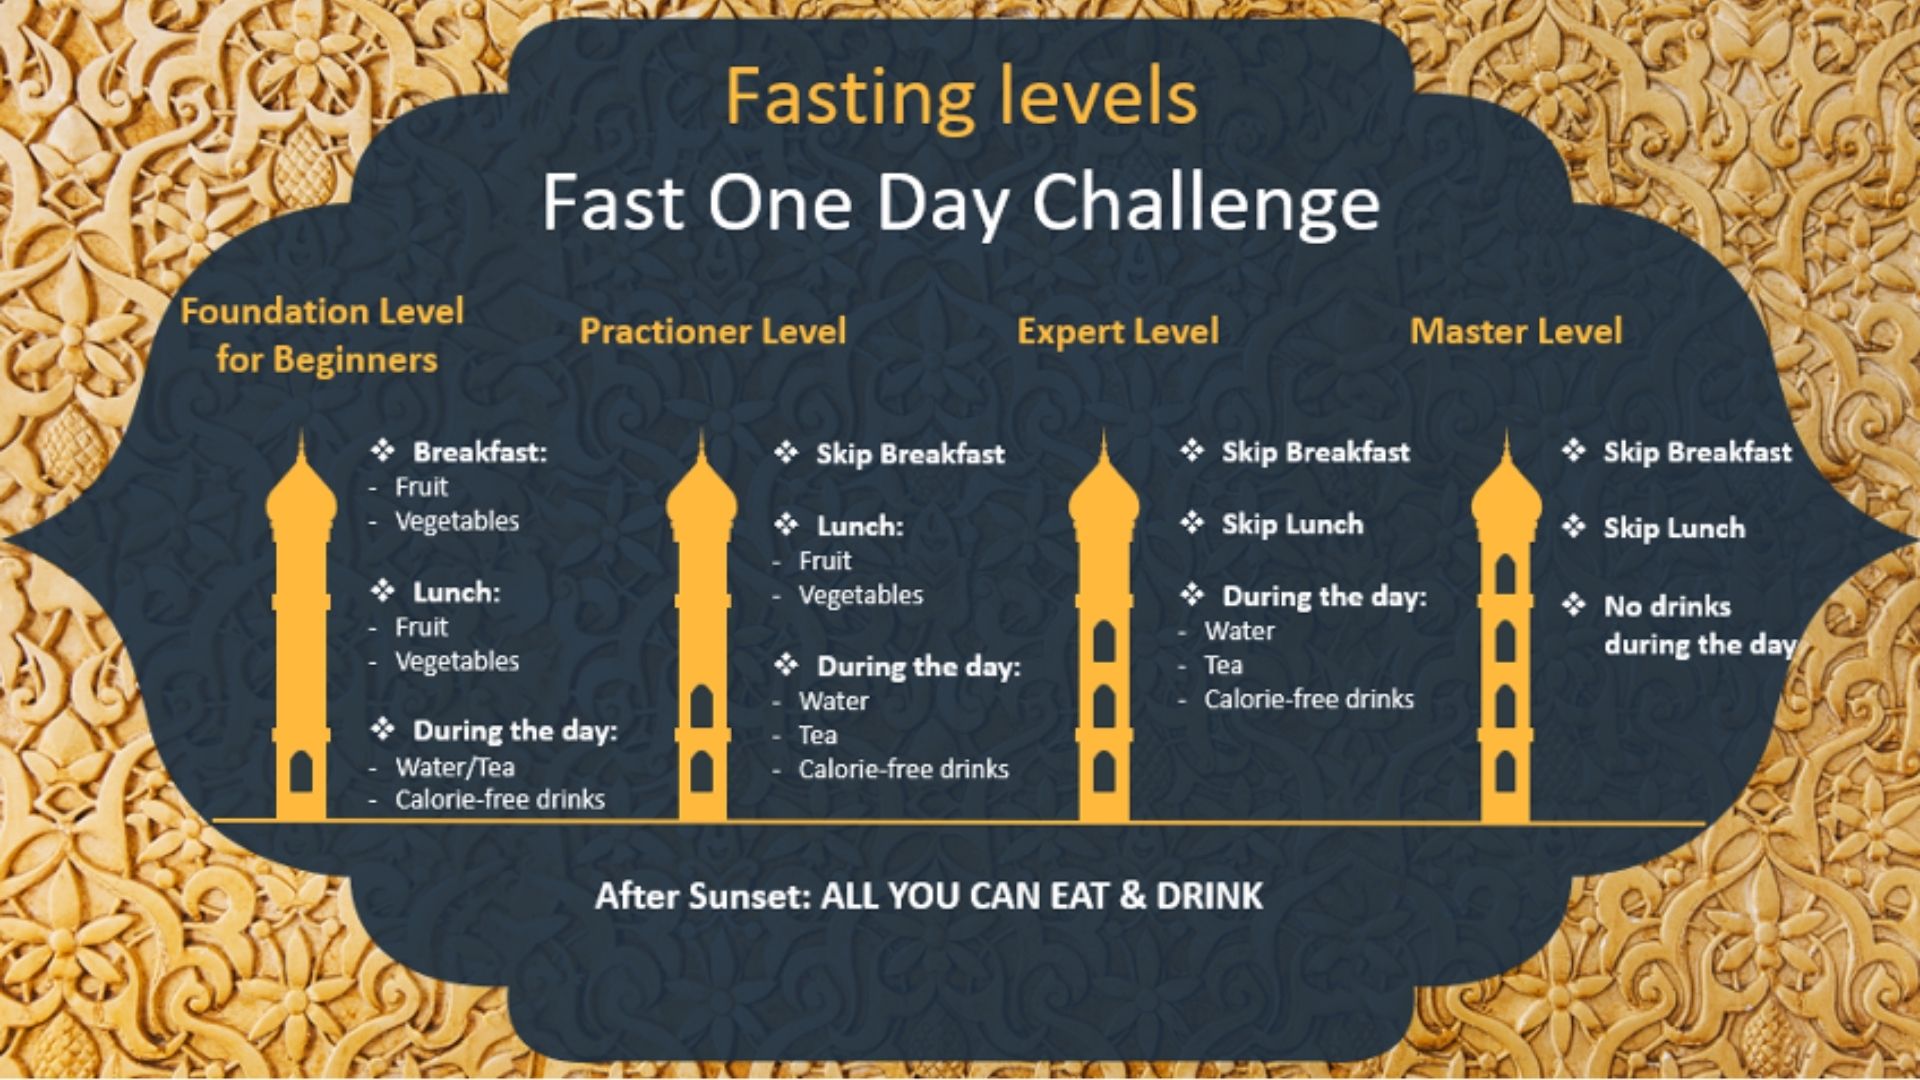 Fasting levels tijdens Fast One Day Challenge van Capgemini